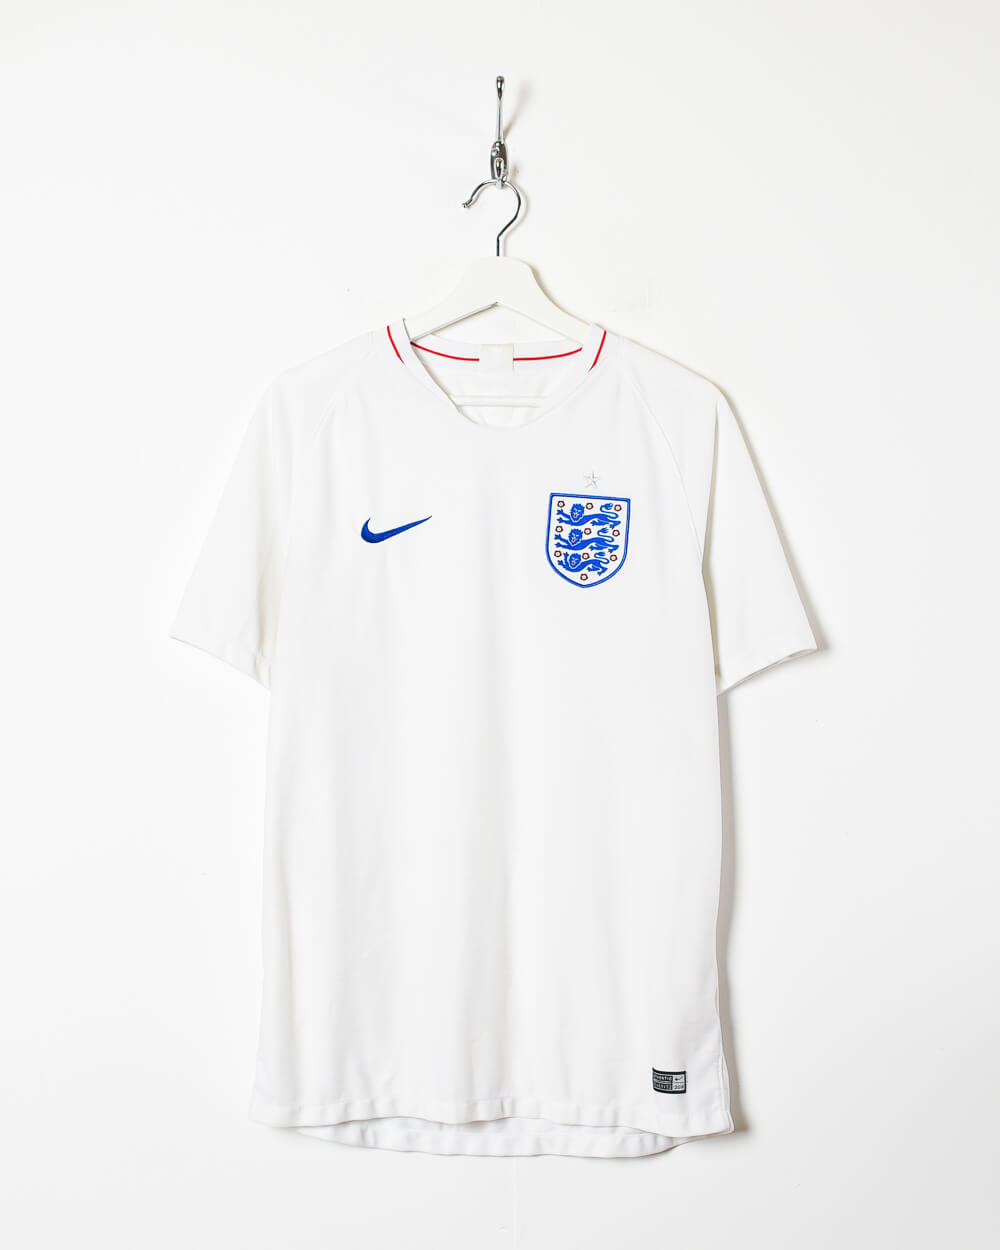 White Nike 2018 England Home Shirt - Large